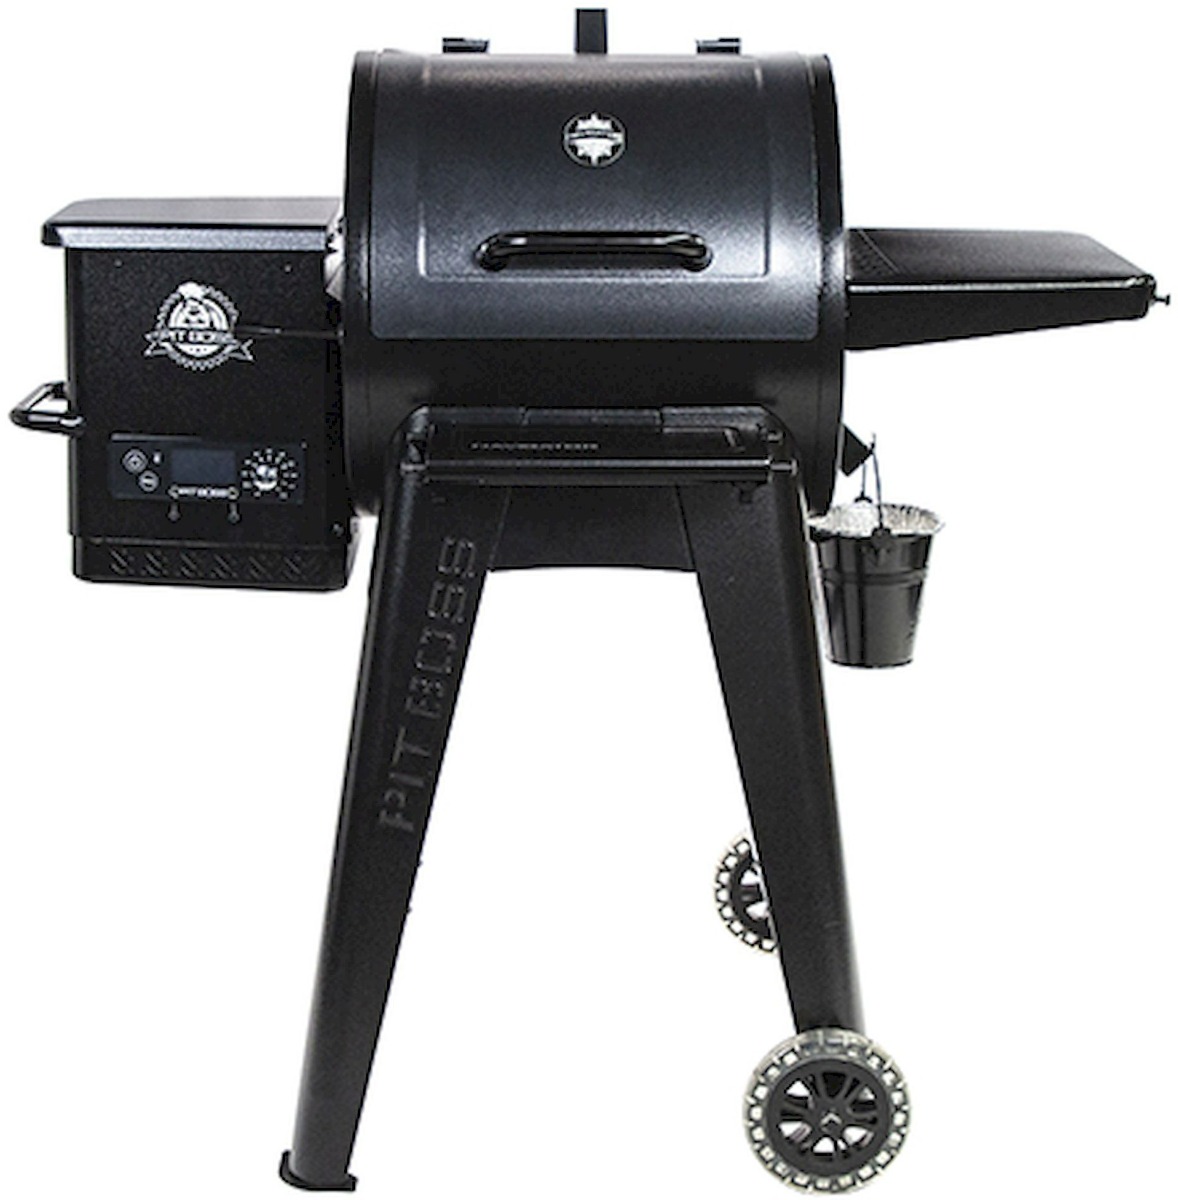 Pit Boss Navigator 550 pellet grill barbecue